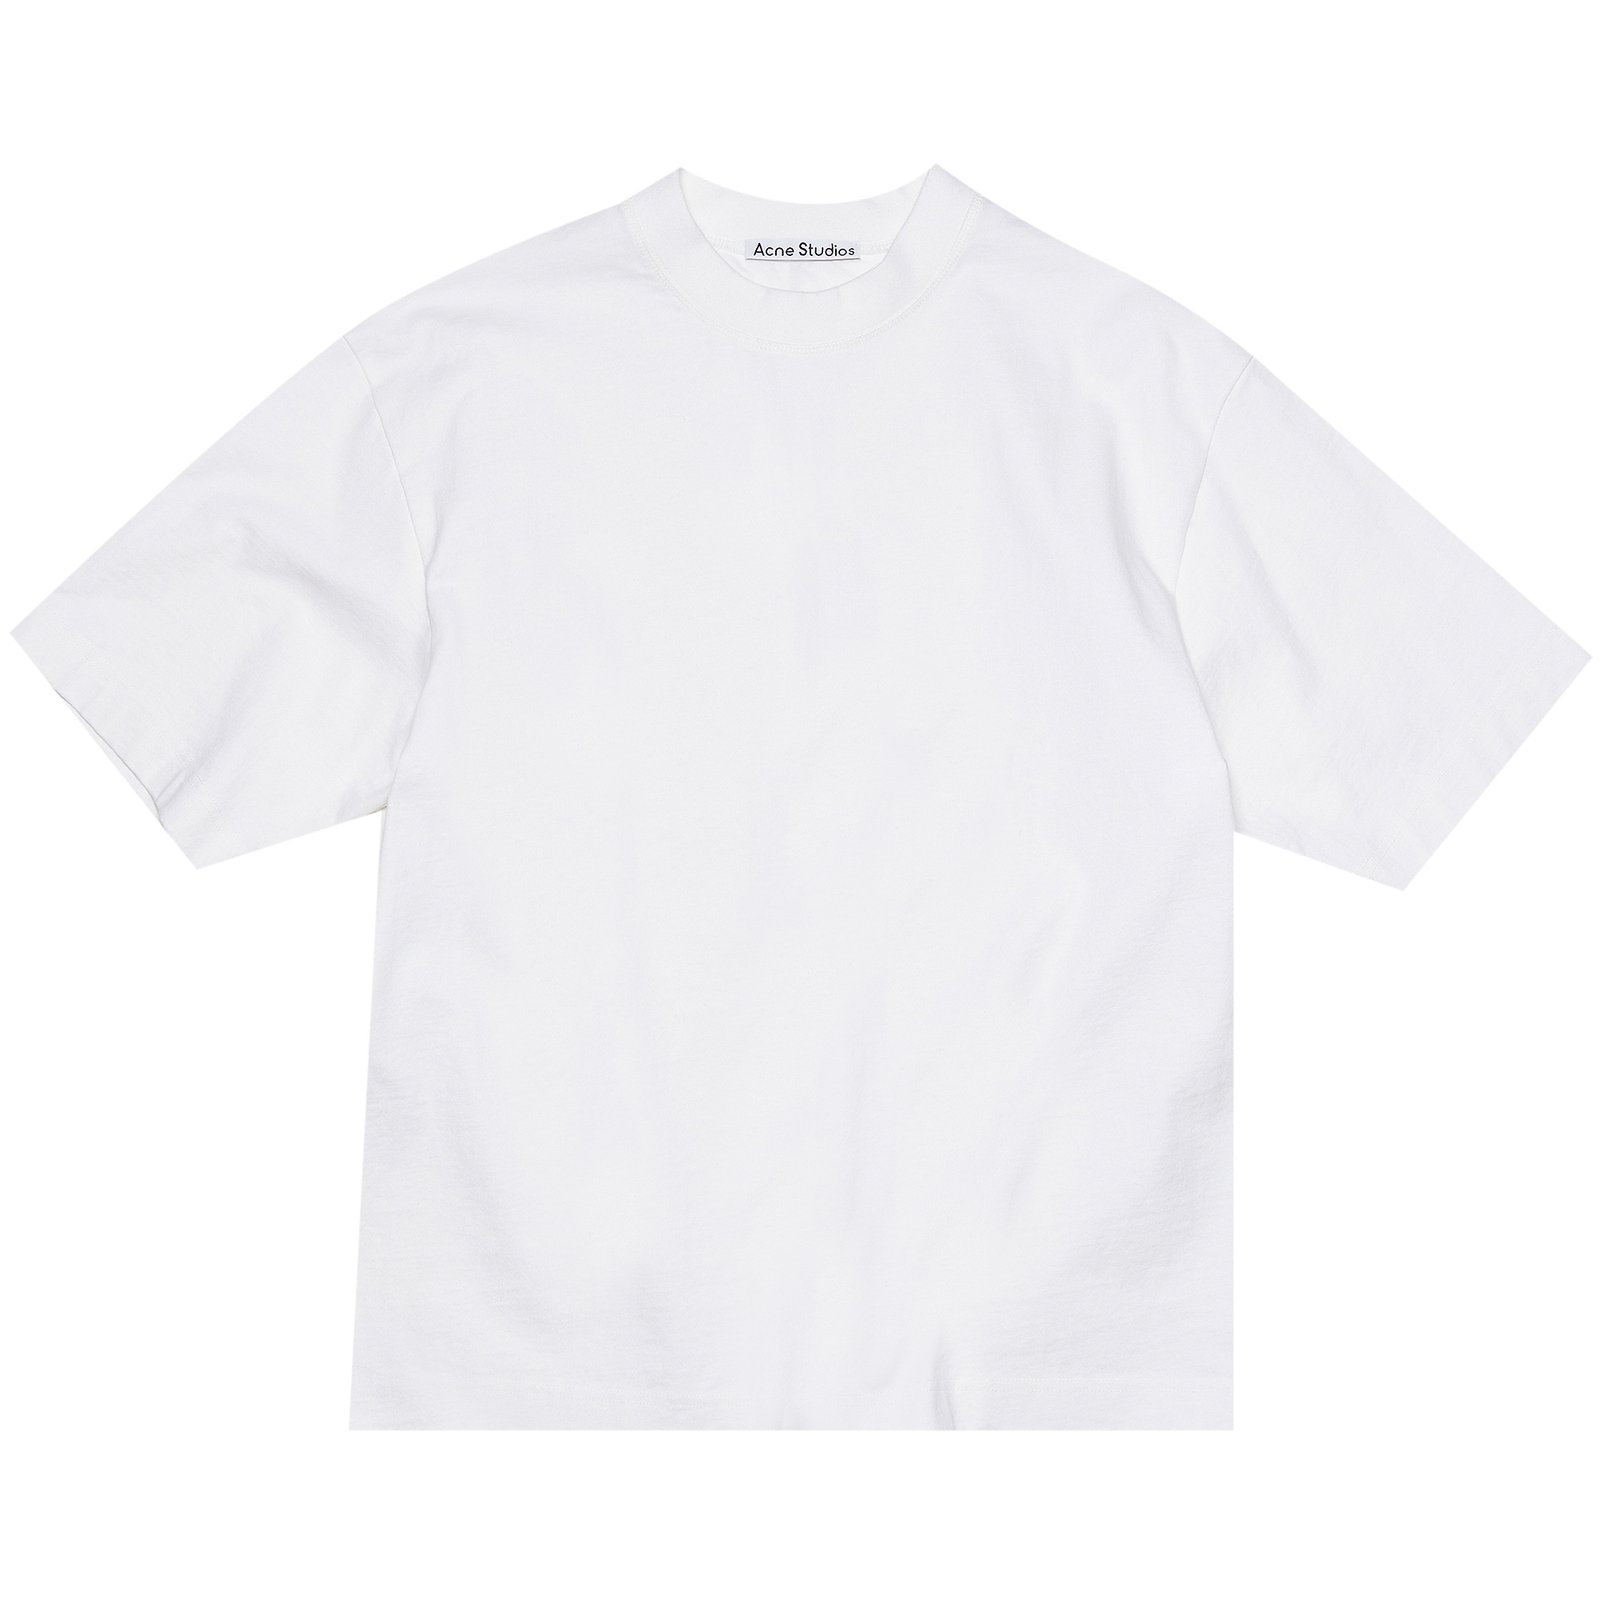 Buy Acne Studios Printed T-Shirt 'Optic White' - BL0278 GOAT OPTI | GOAT